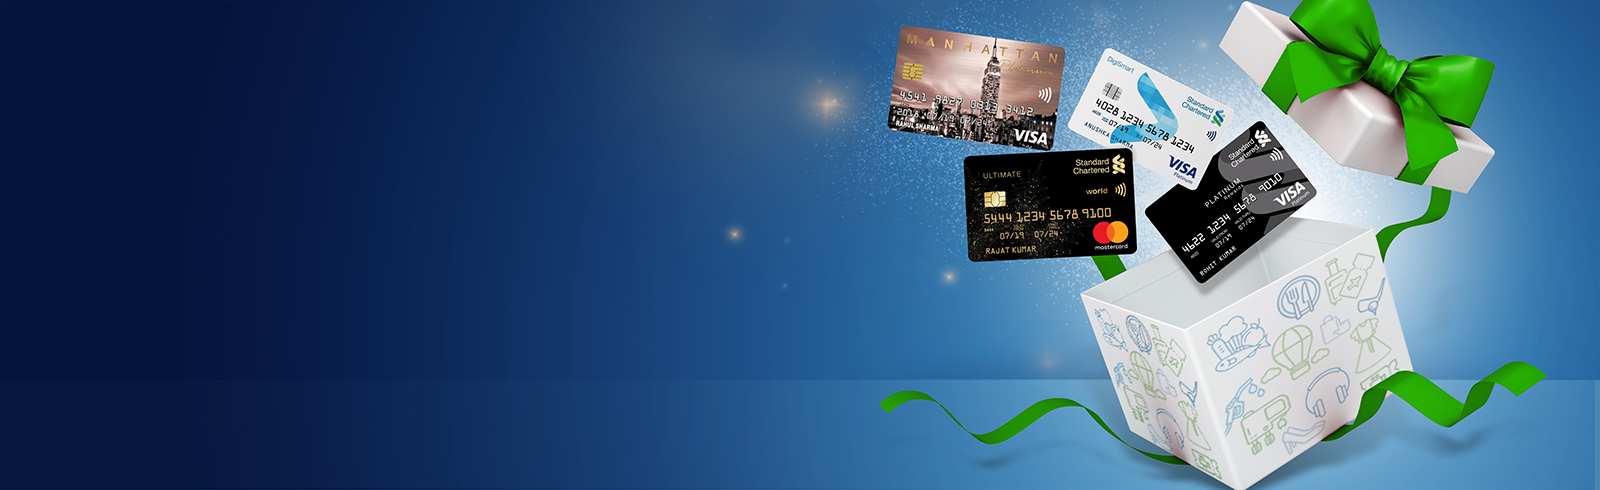 Best Cashback Credit Cards by Standard Chartered